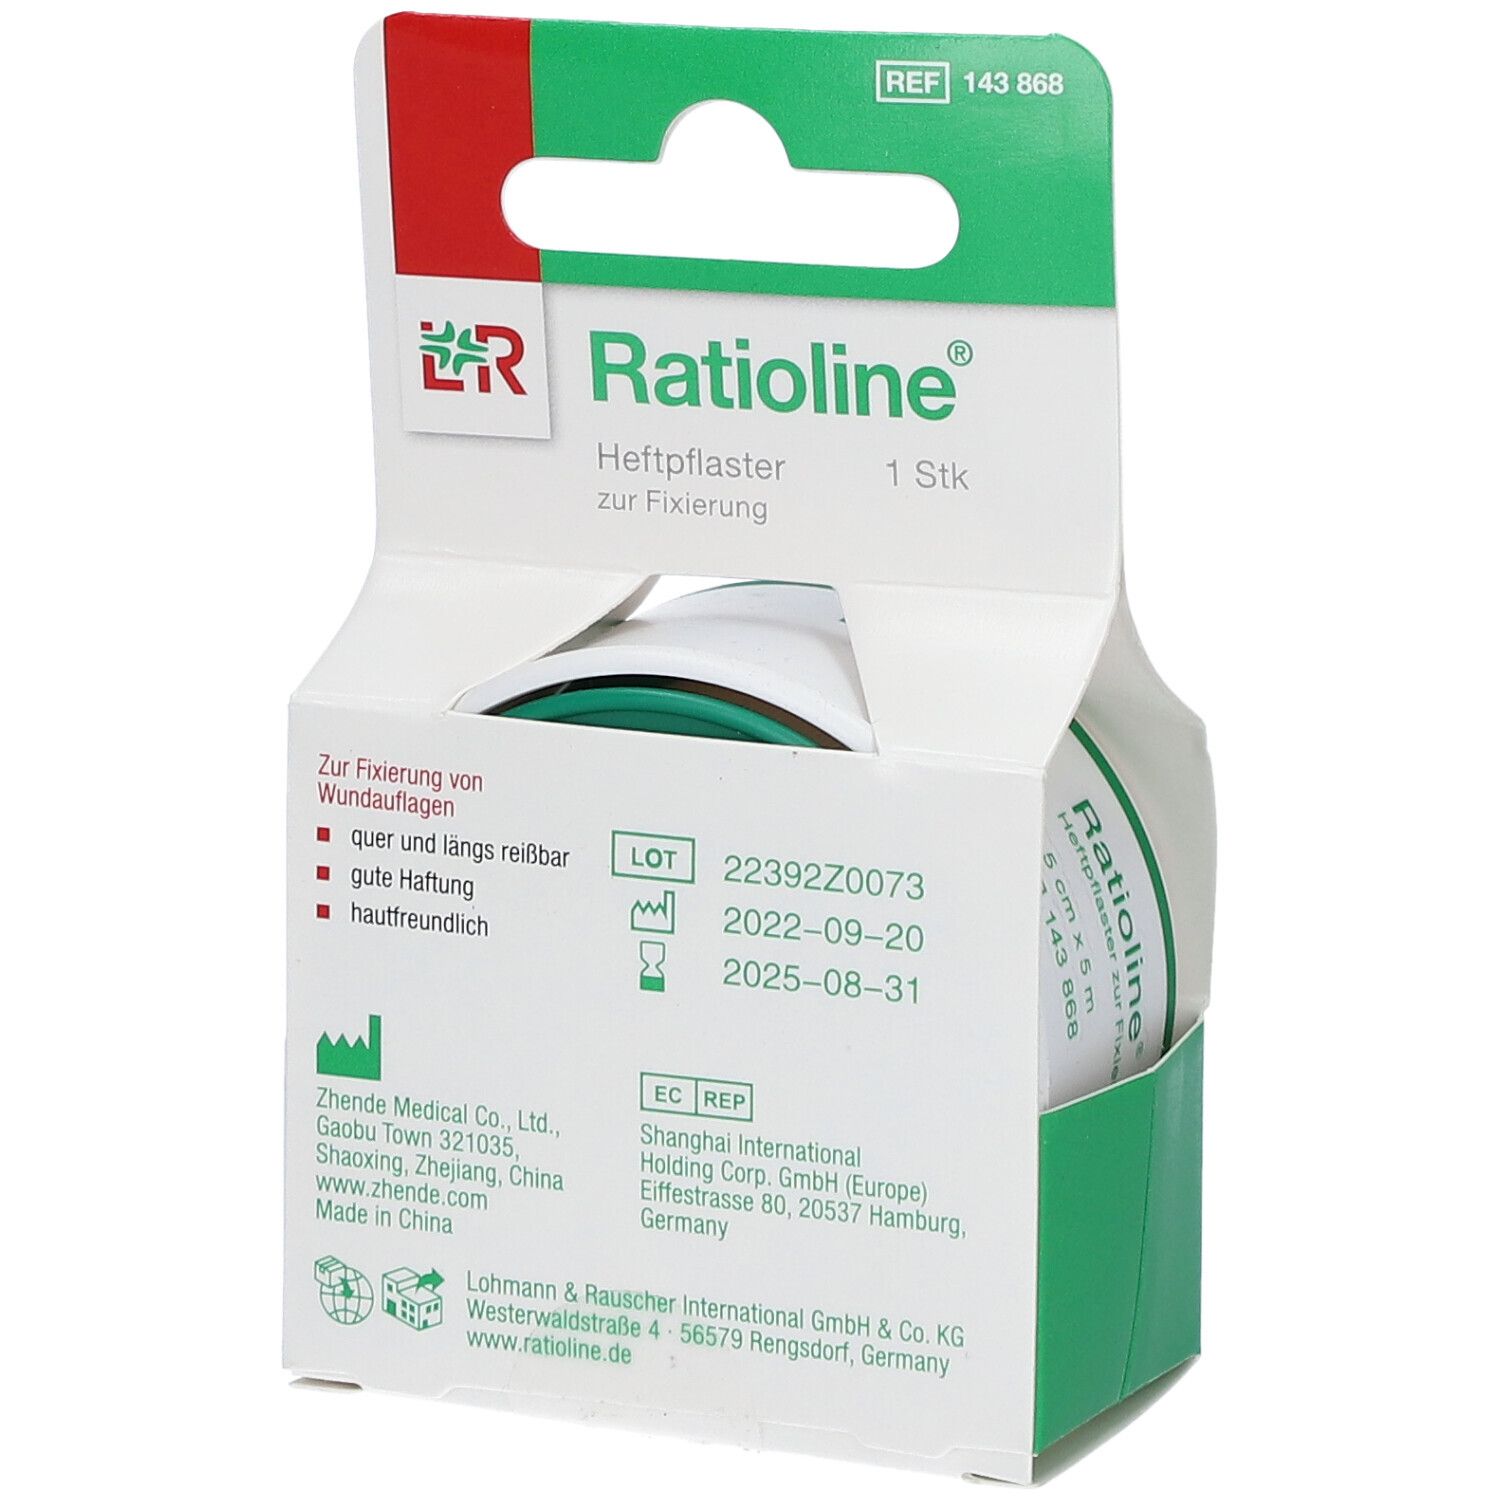 Ratioline® acute Heftpflaster 2,5 cm x 5 m